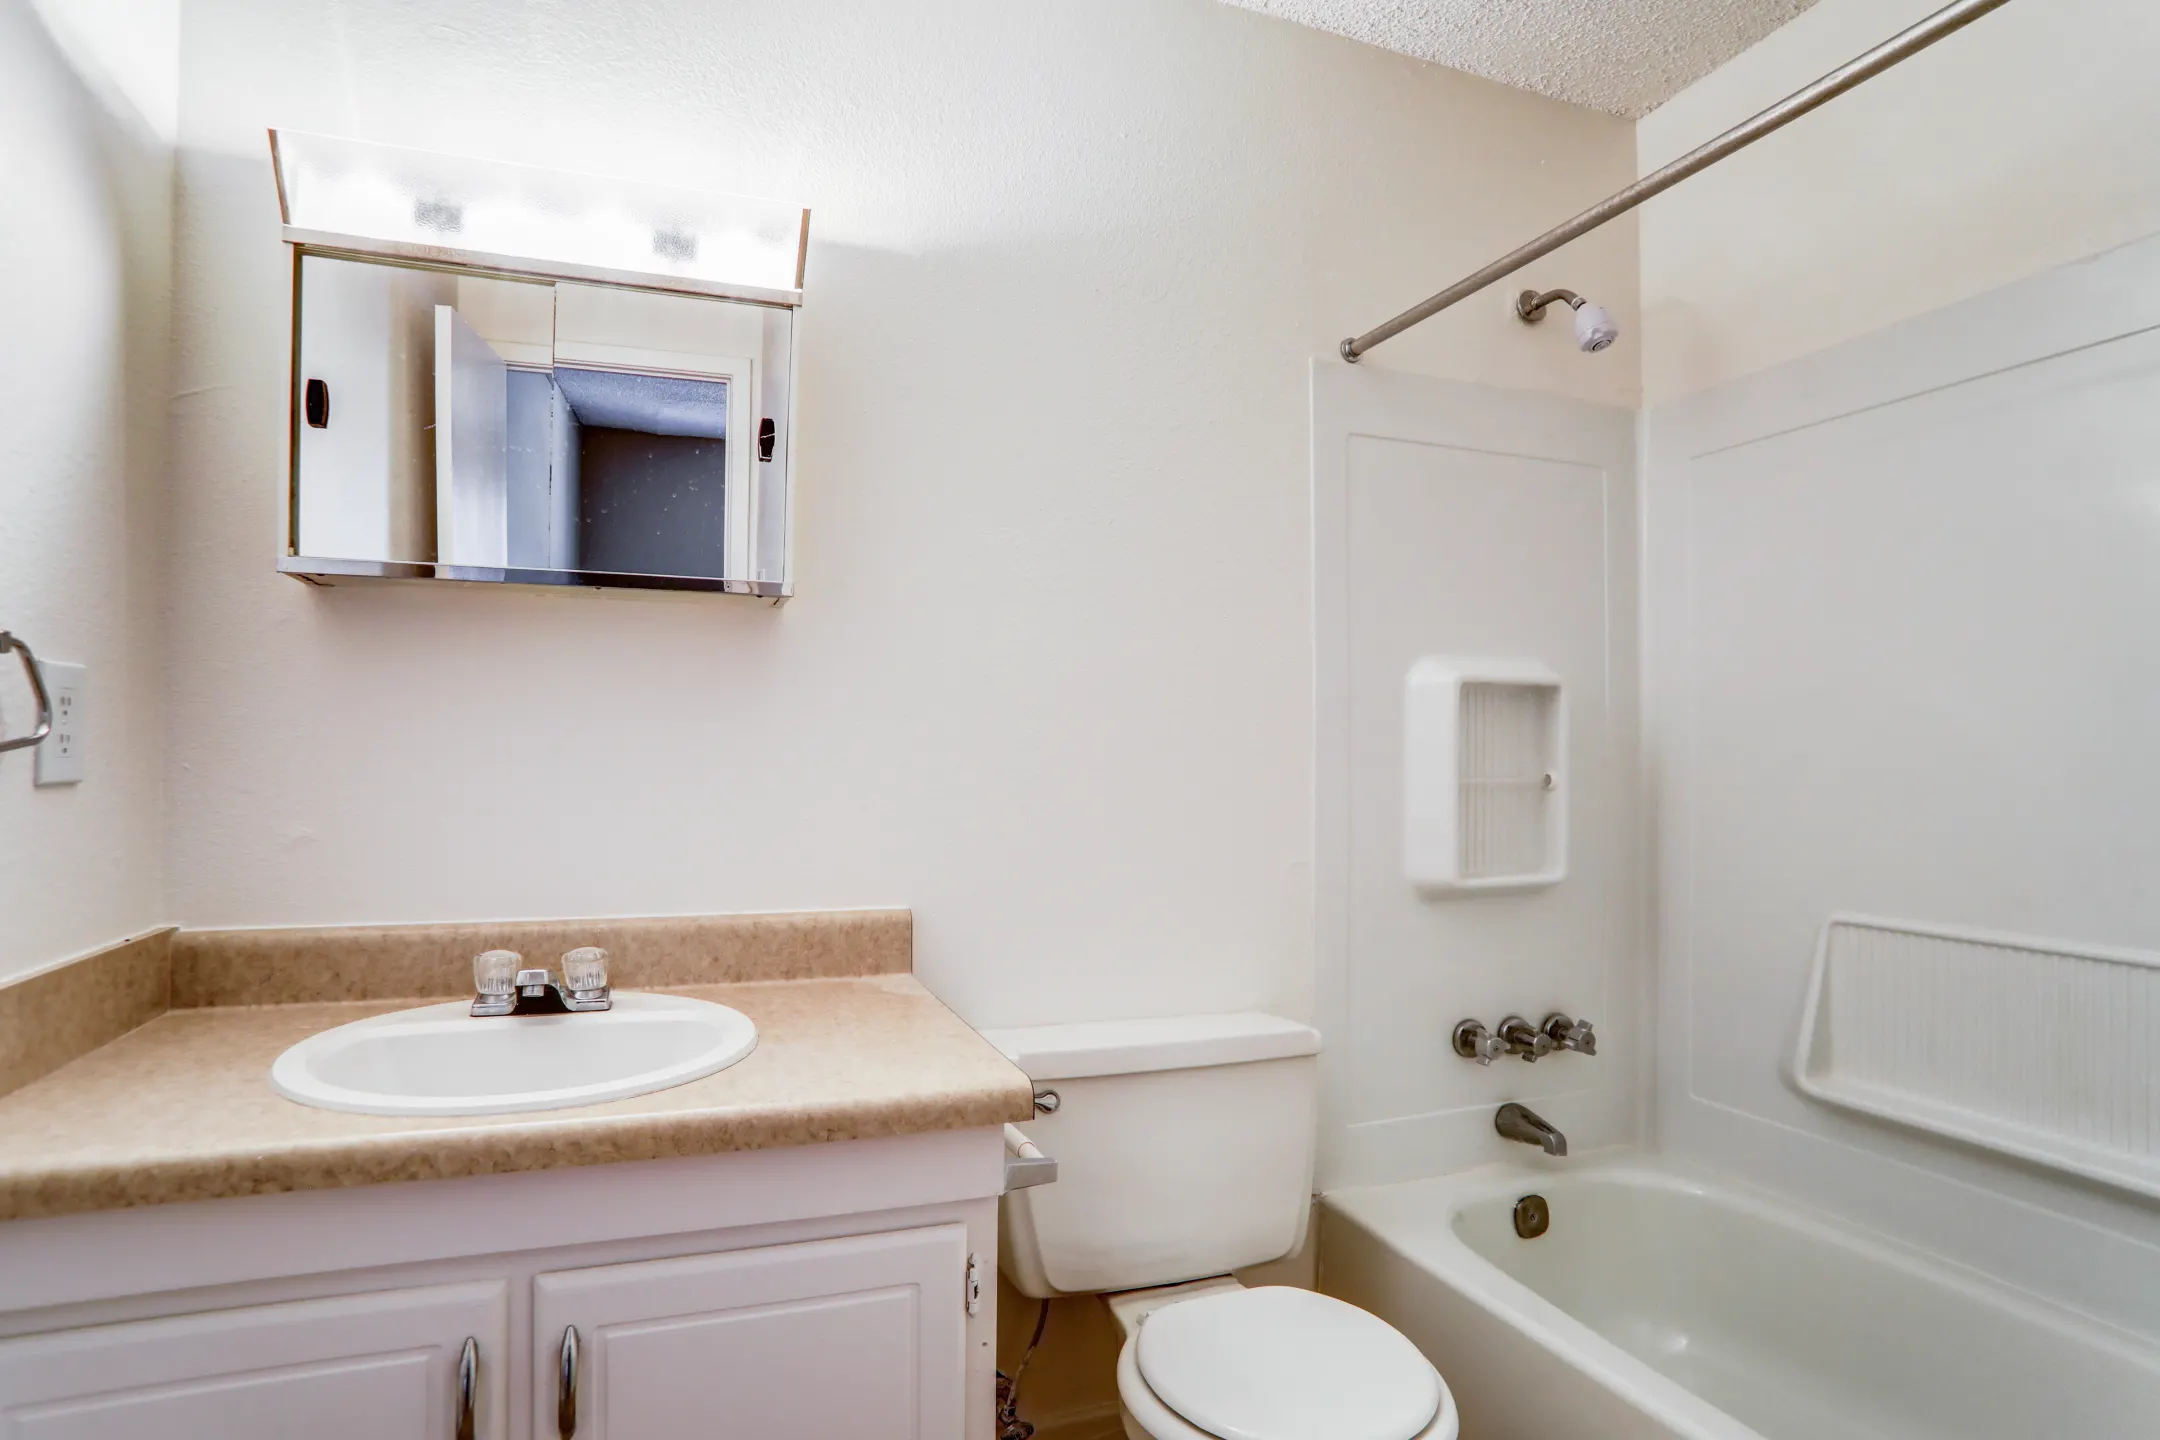 Bathroom - Fox Hill Apartments - Baton Rouge, LA